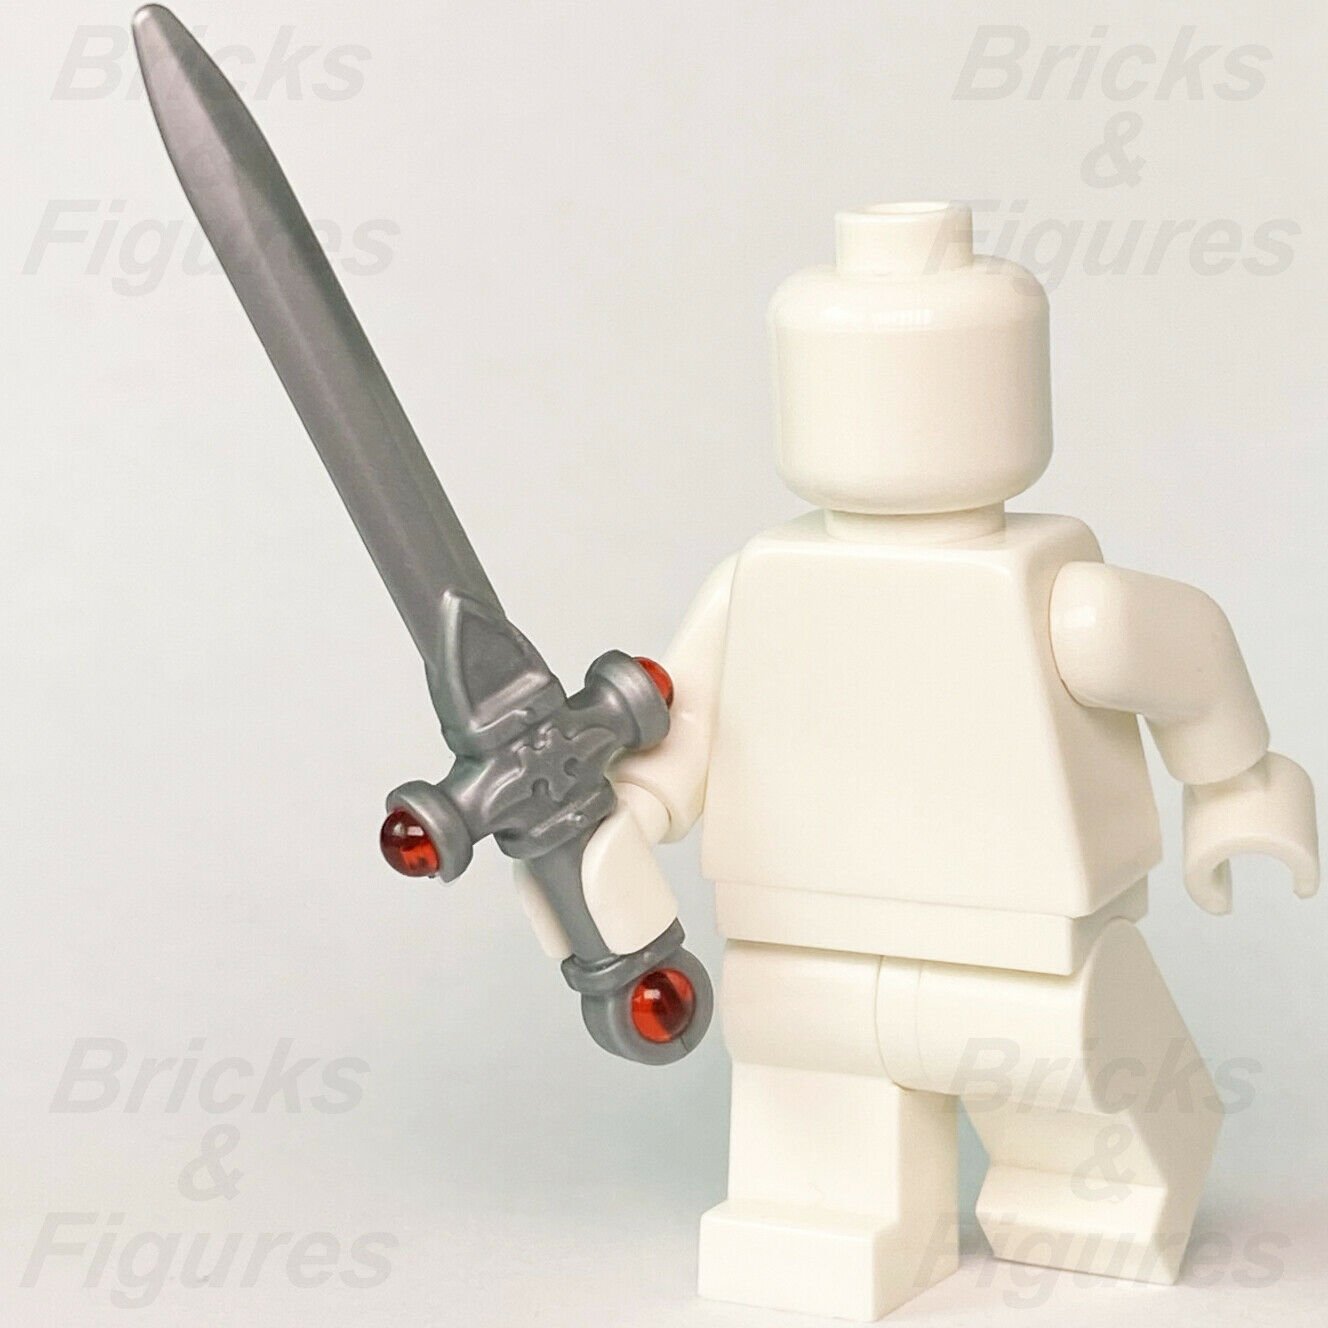 New Harry Potter LEGO Sword of Gryffindor Minifigure Weapon Part 76389 71028 - Bricks & Figures